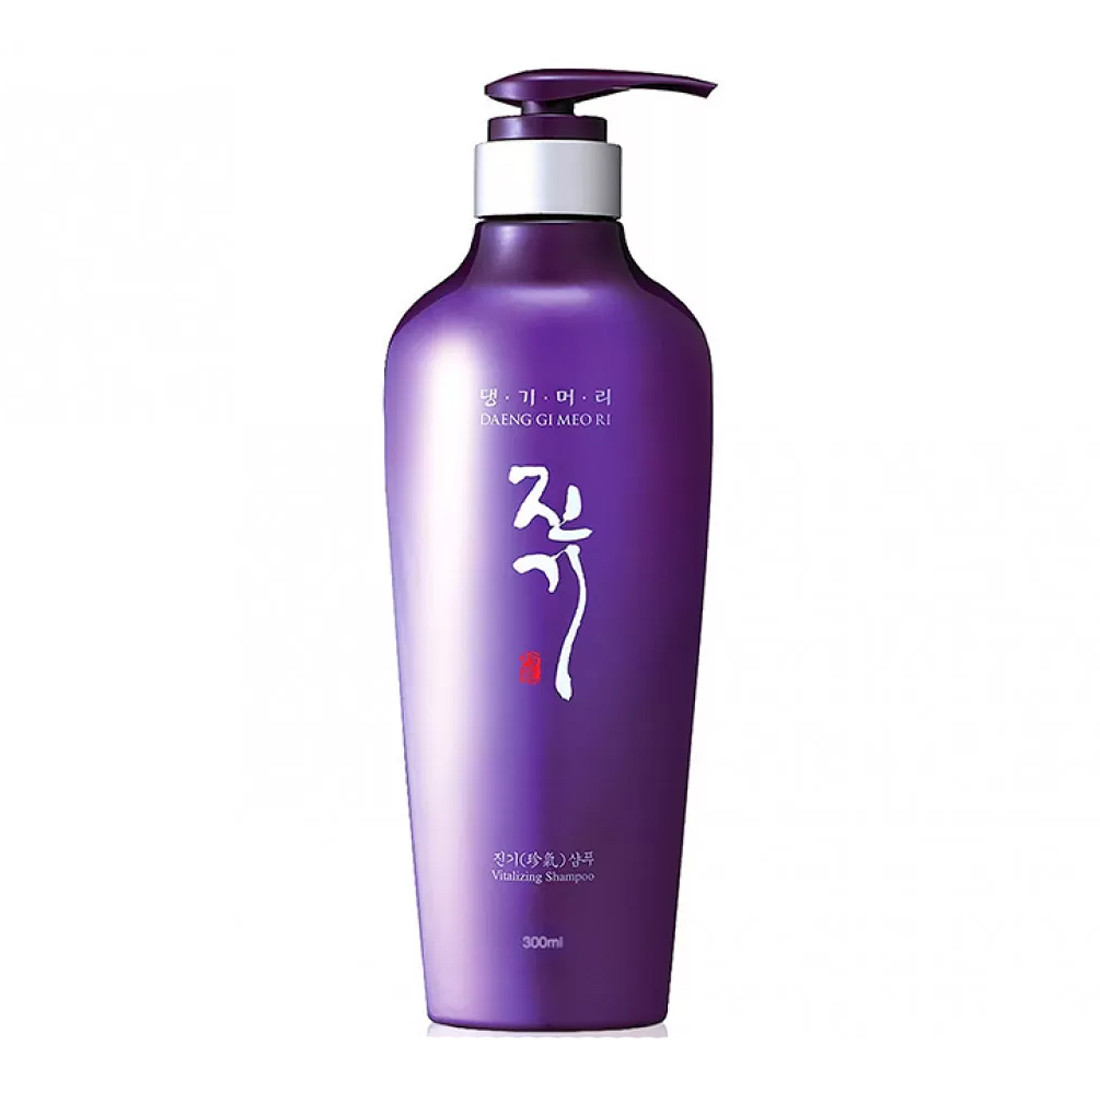 DAENG GI MEO RI Vitalizing Shampoo - Восстанавливающий шампунь для ослабленных волос